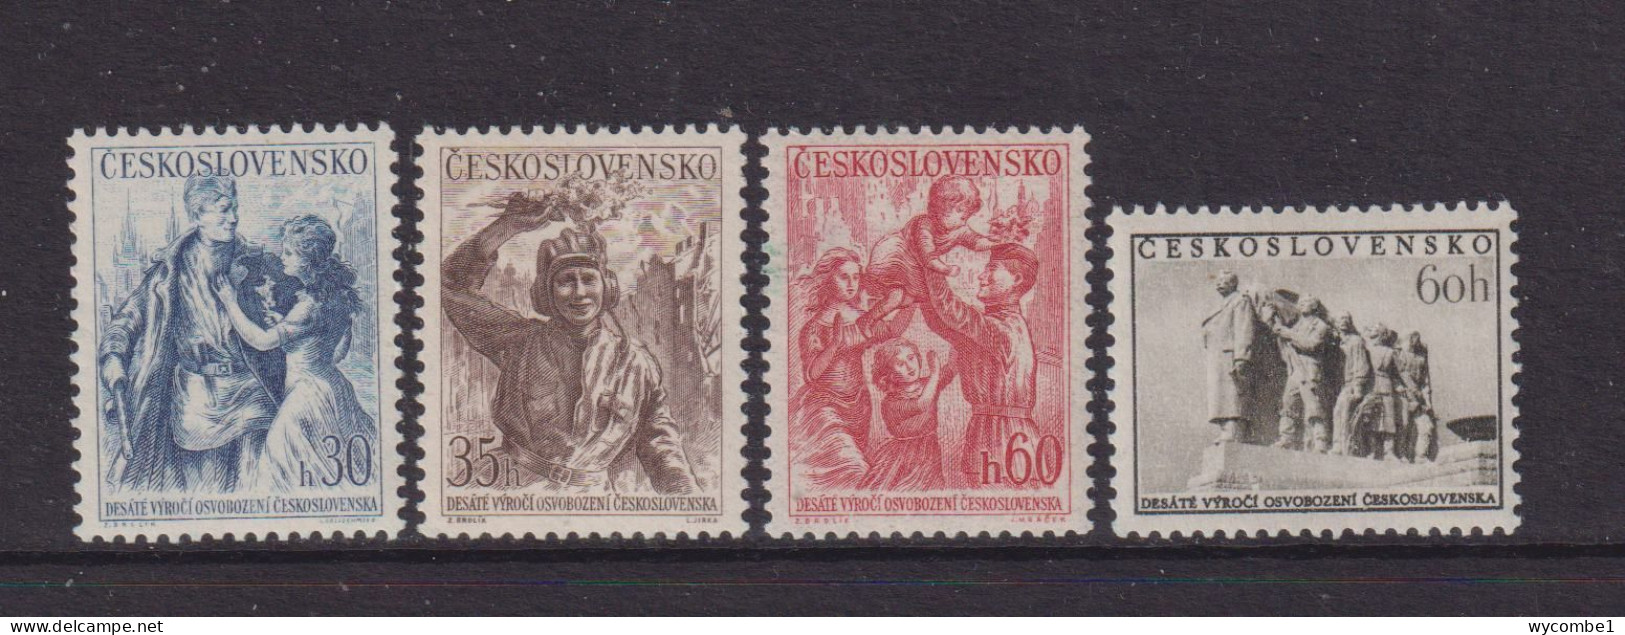 CZECHOSLOVAKIA  - 1955  Liberation  Set  Never Hinged Mint - Unused Stamps